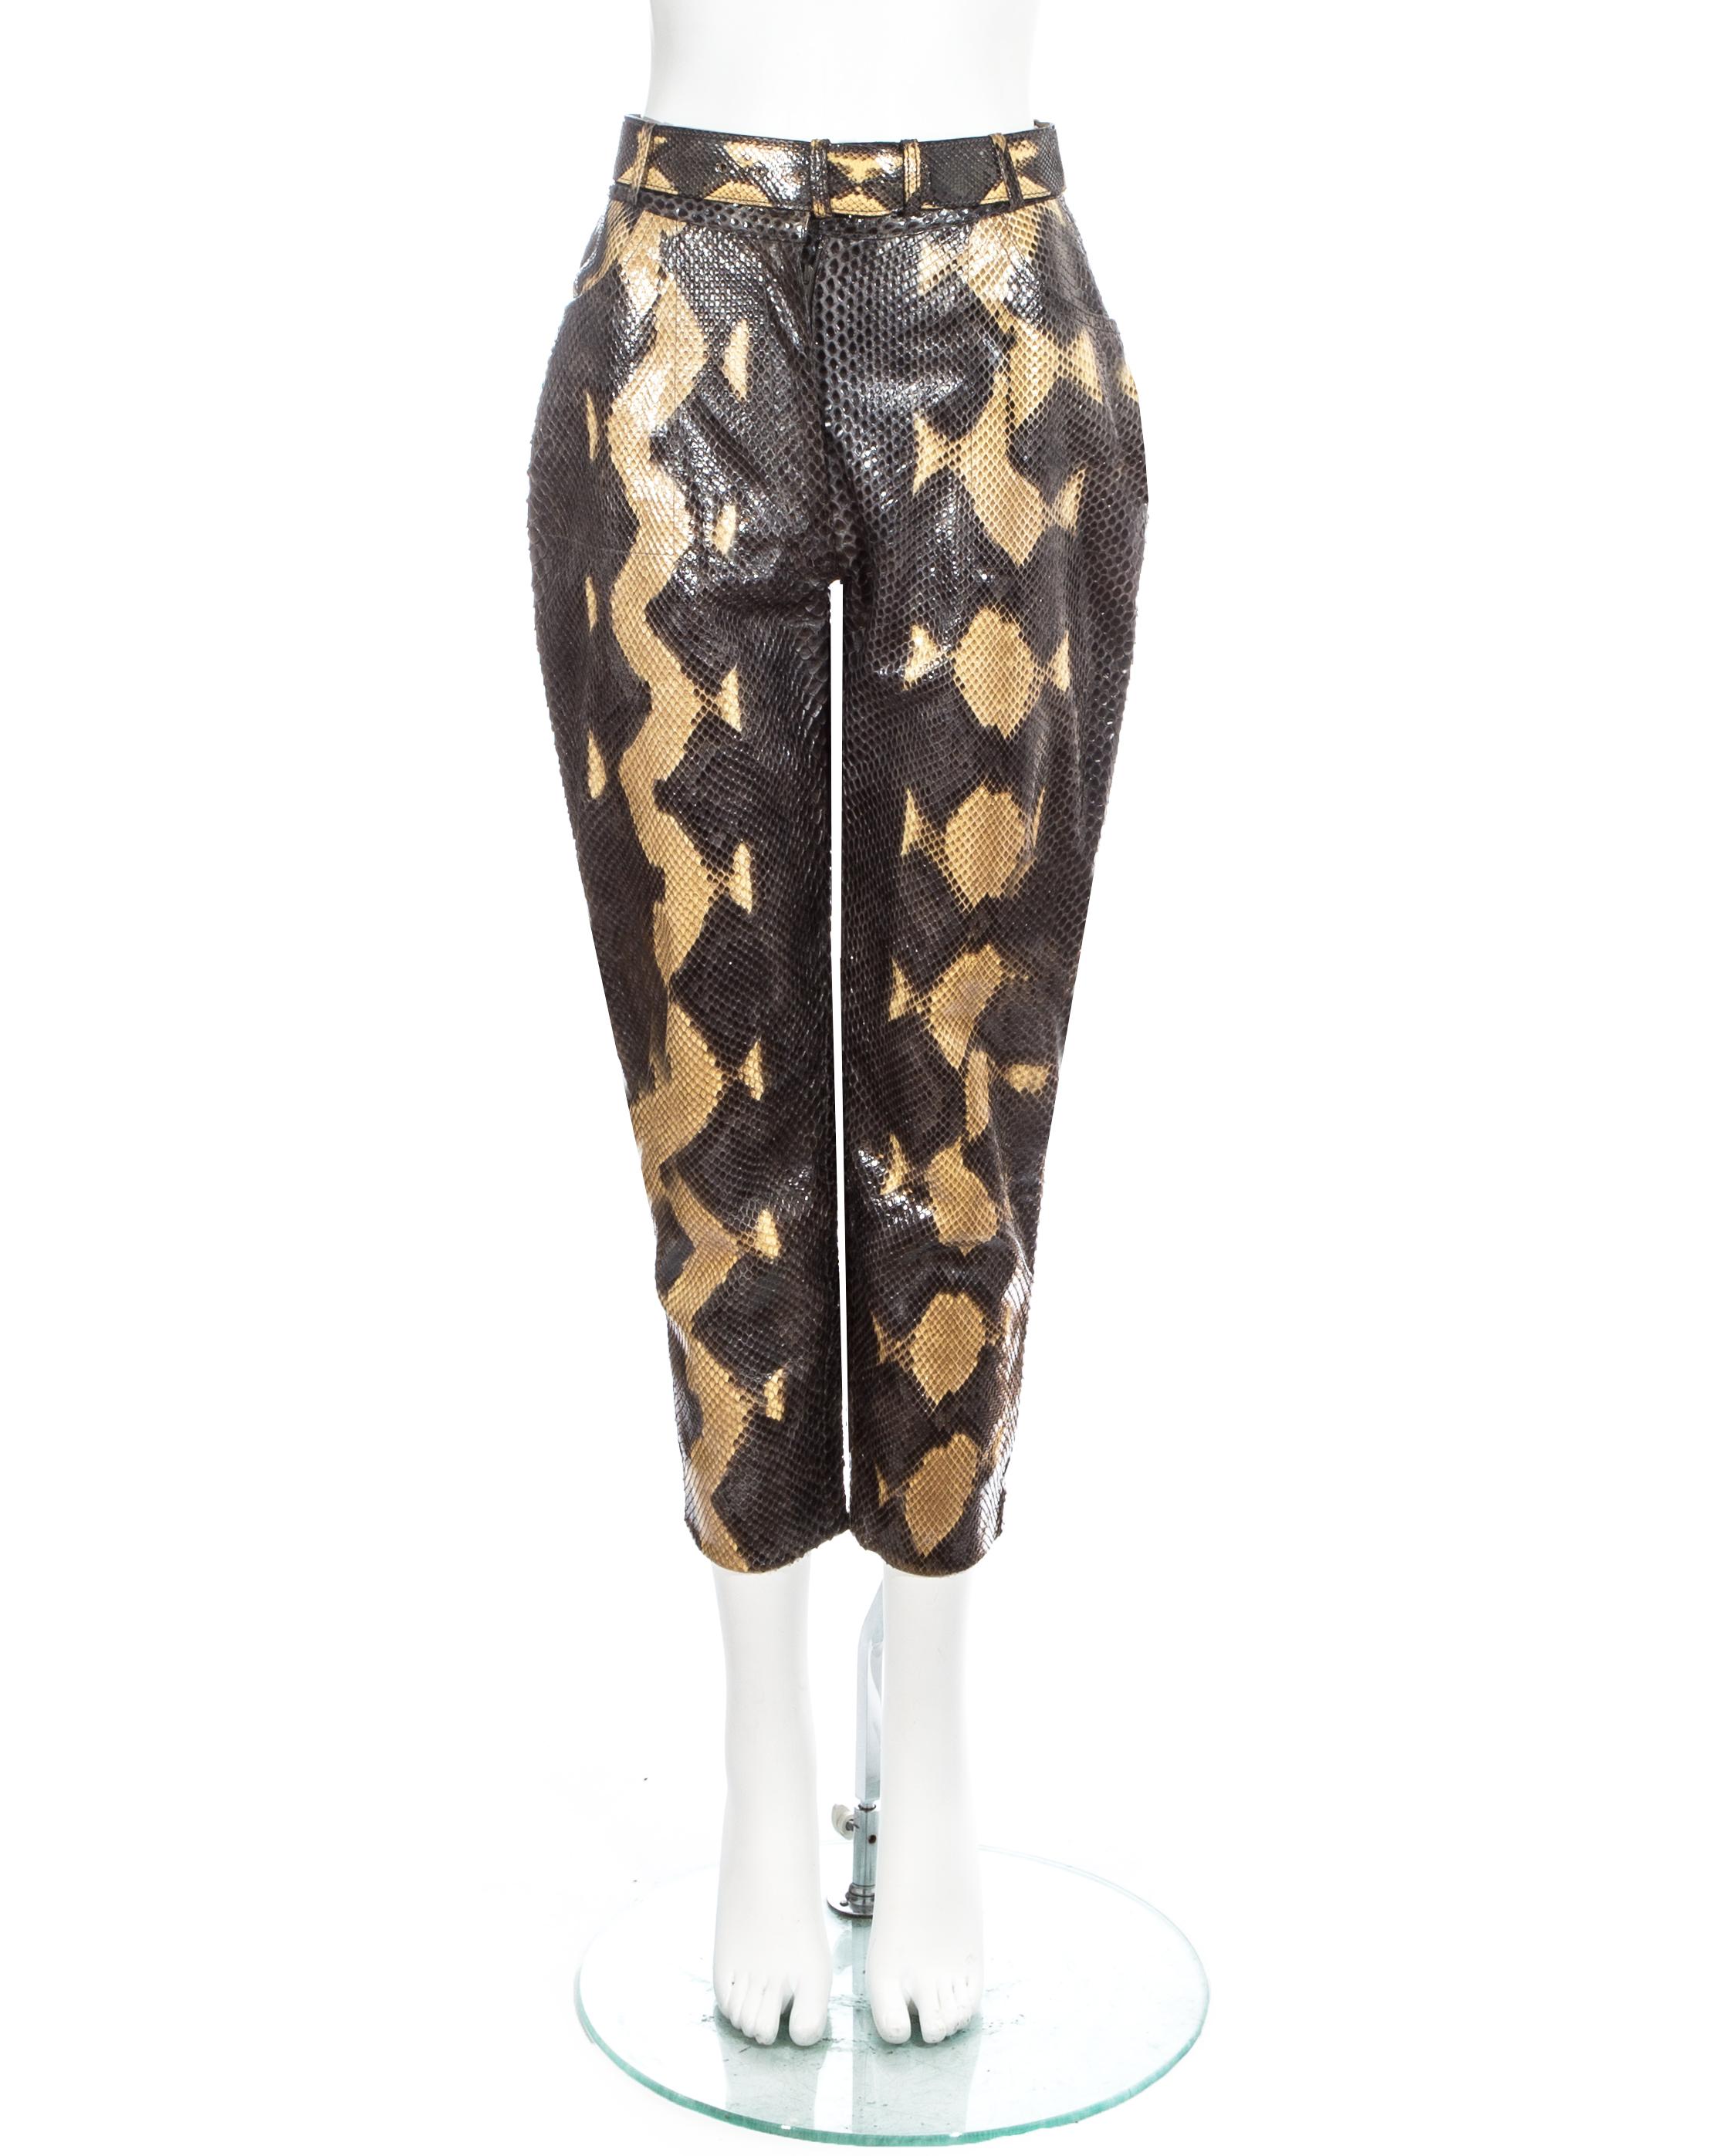 Azzedine Alaia; cream and grey python snakeskin pants. High waisted, cropped leg, matching belt.

Spring-Summer 1991